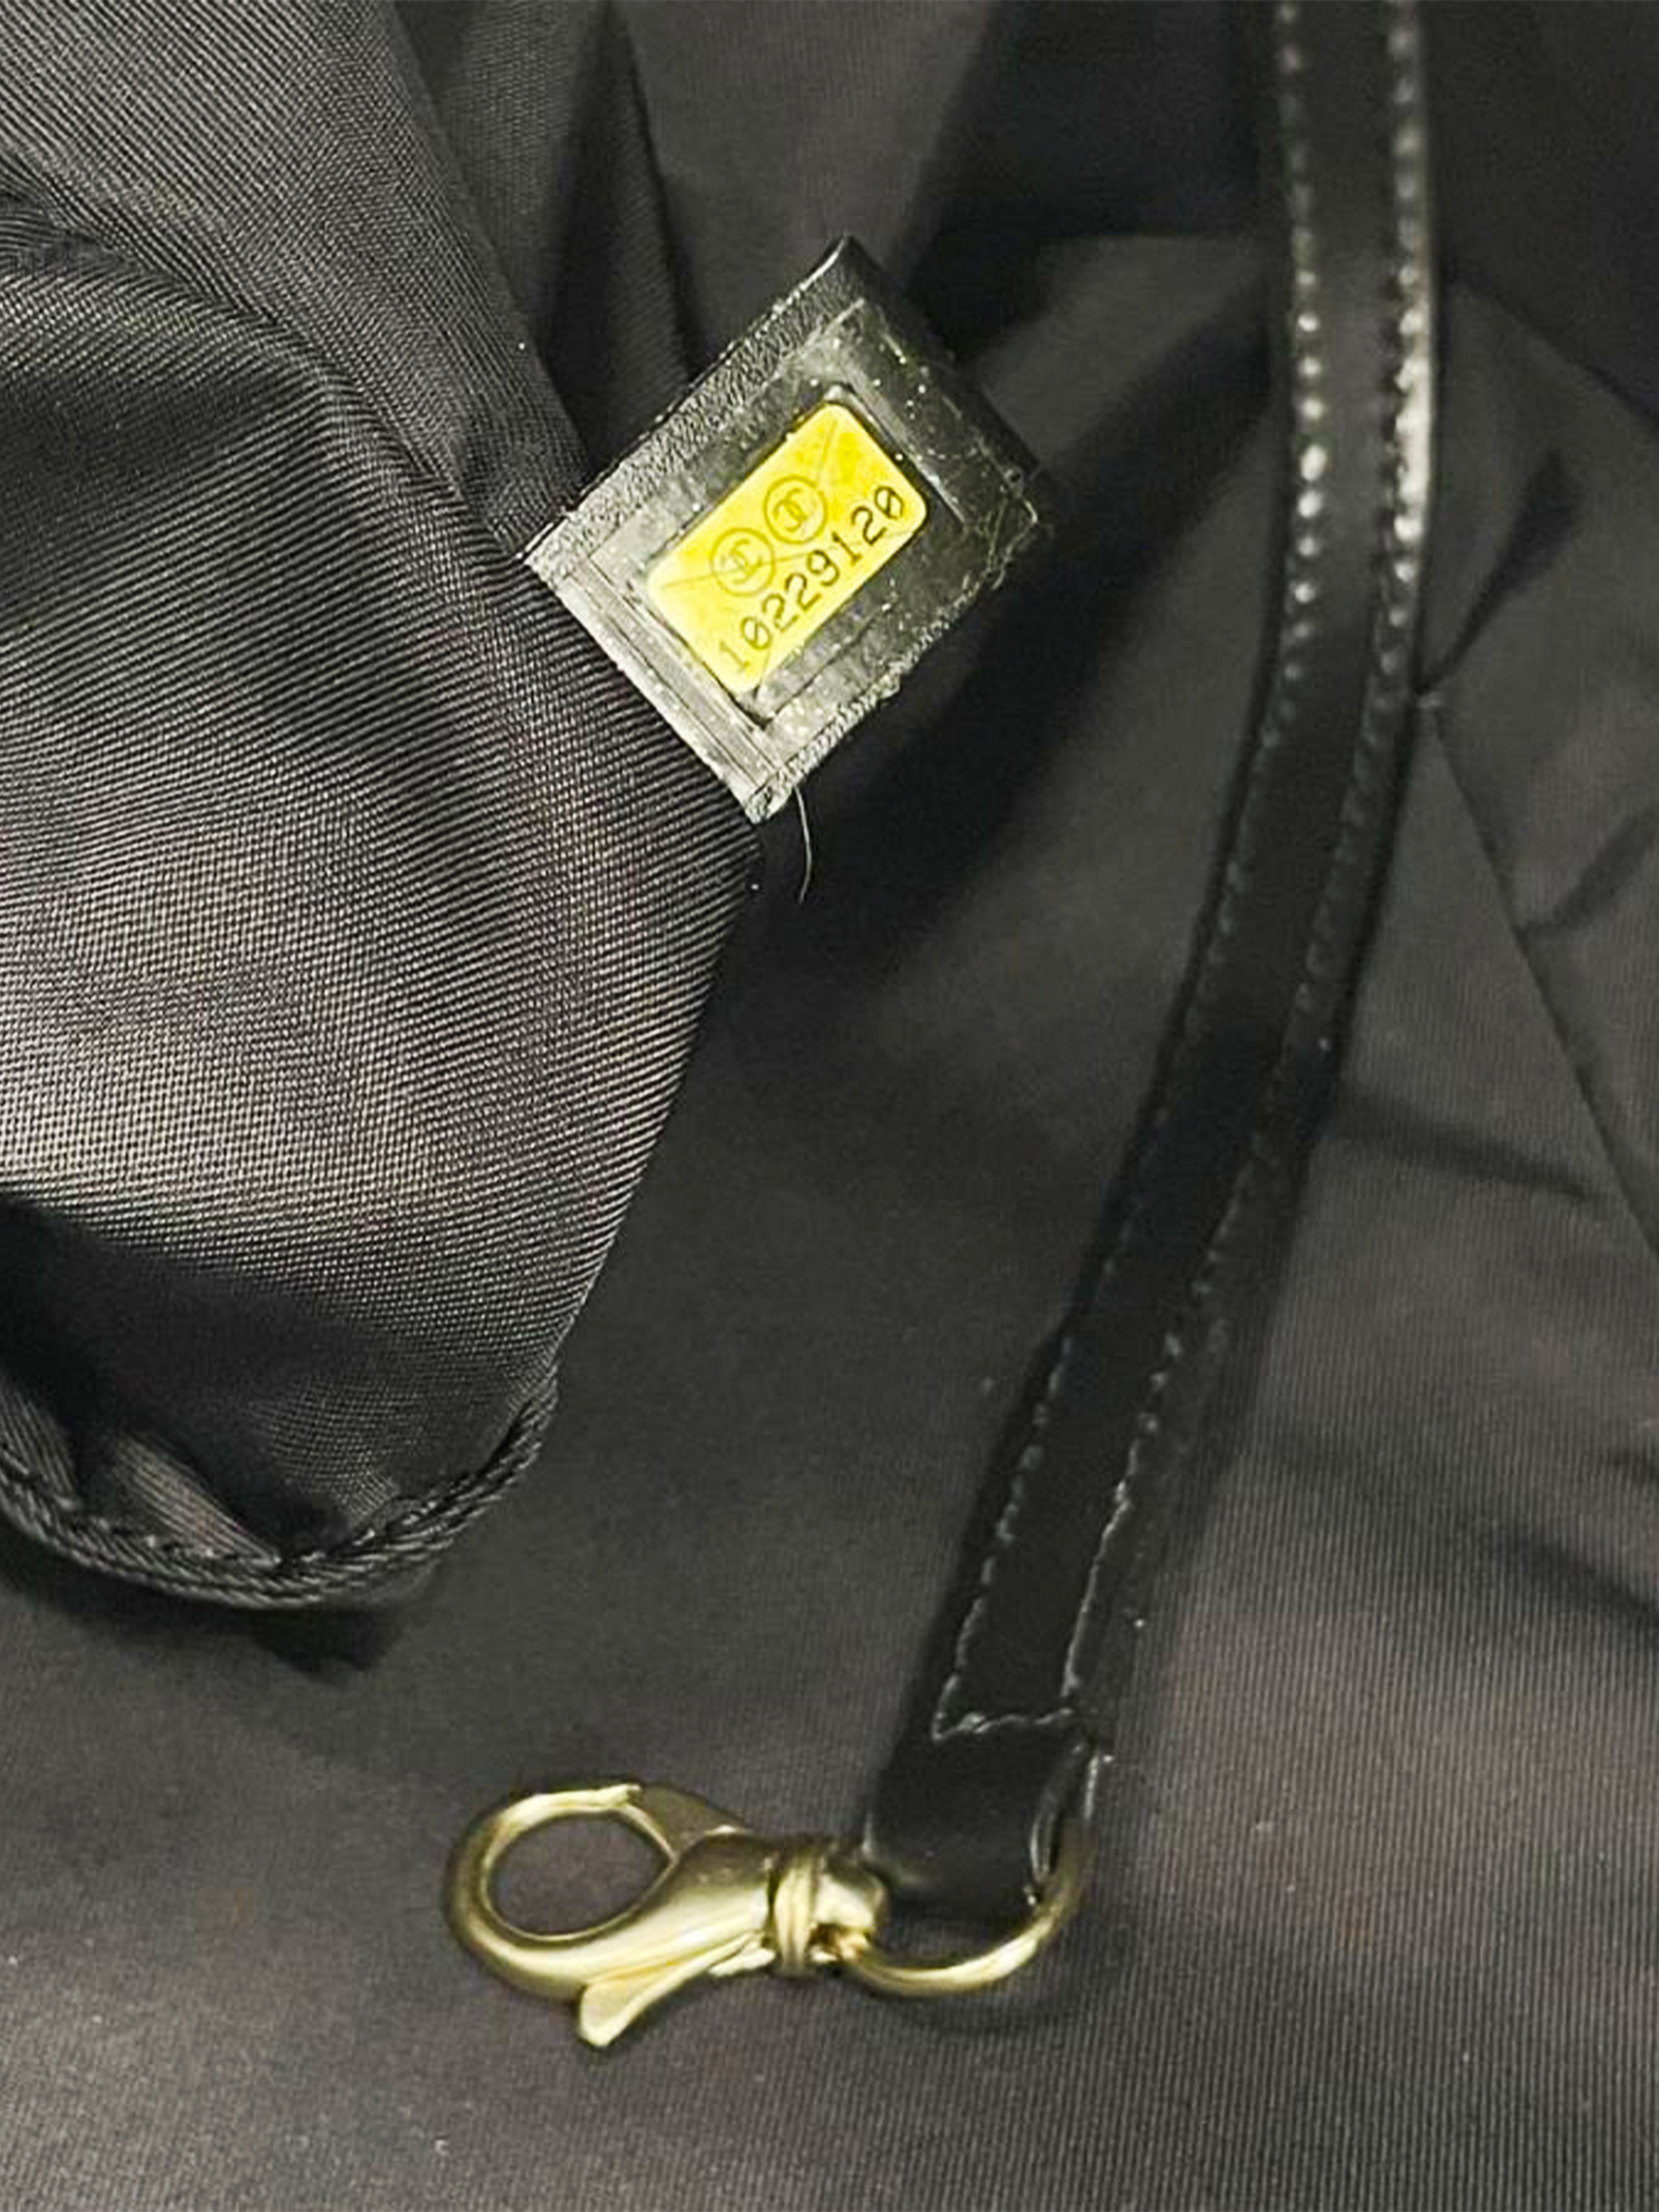 Chanel 2005 Black Travel Line Jacquard Tote Bag · INTO